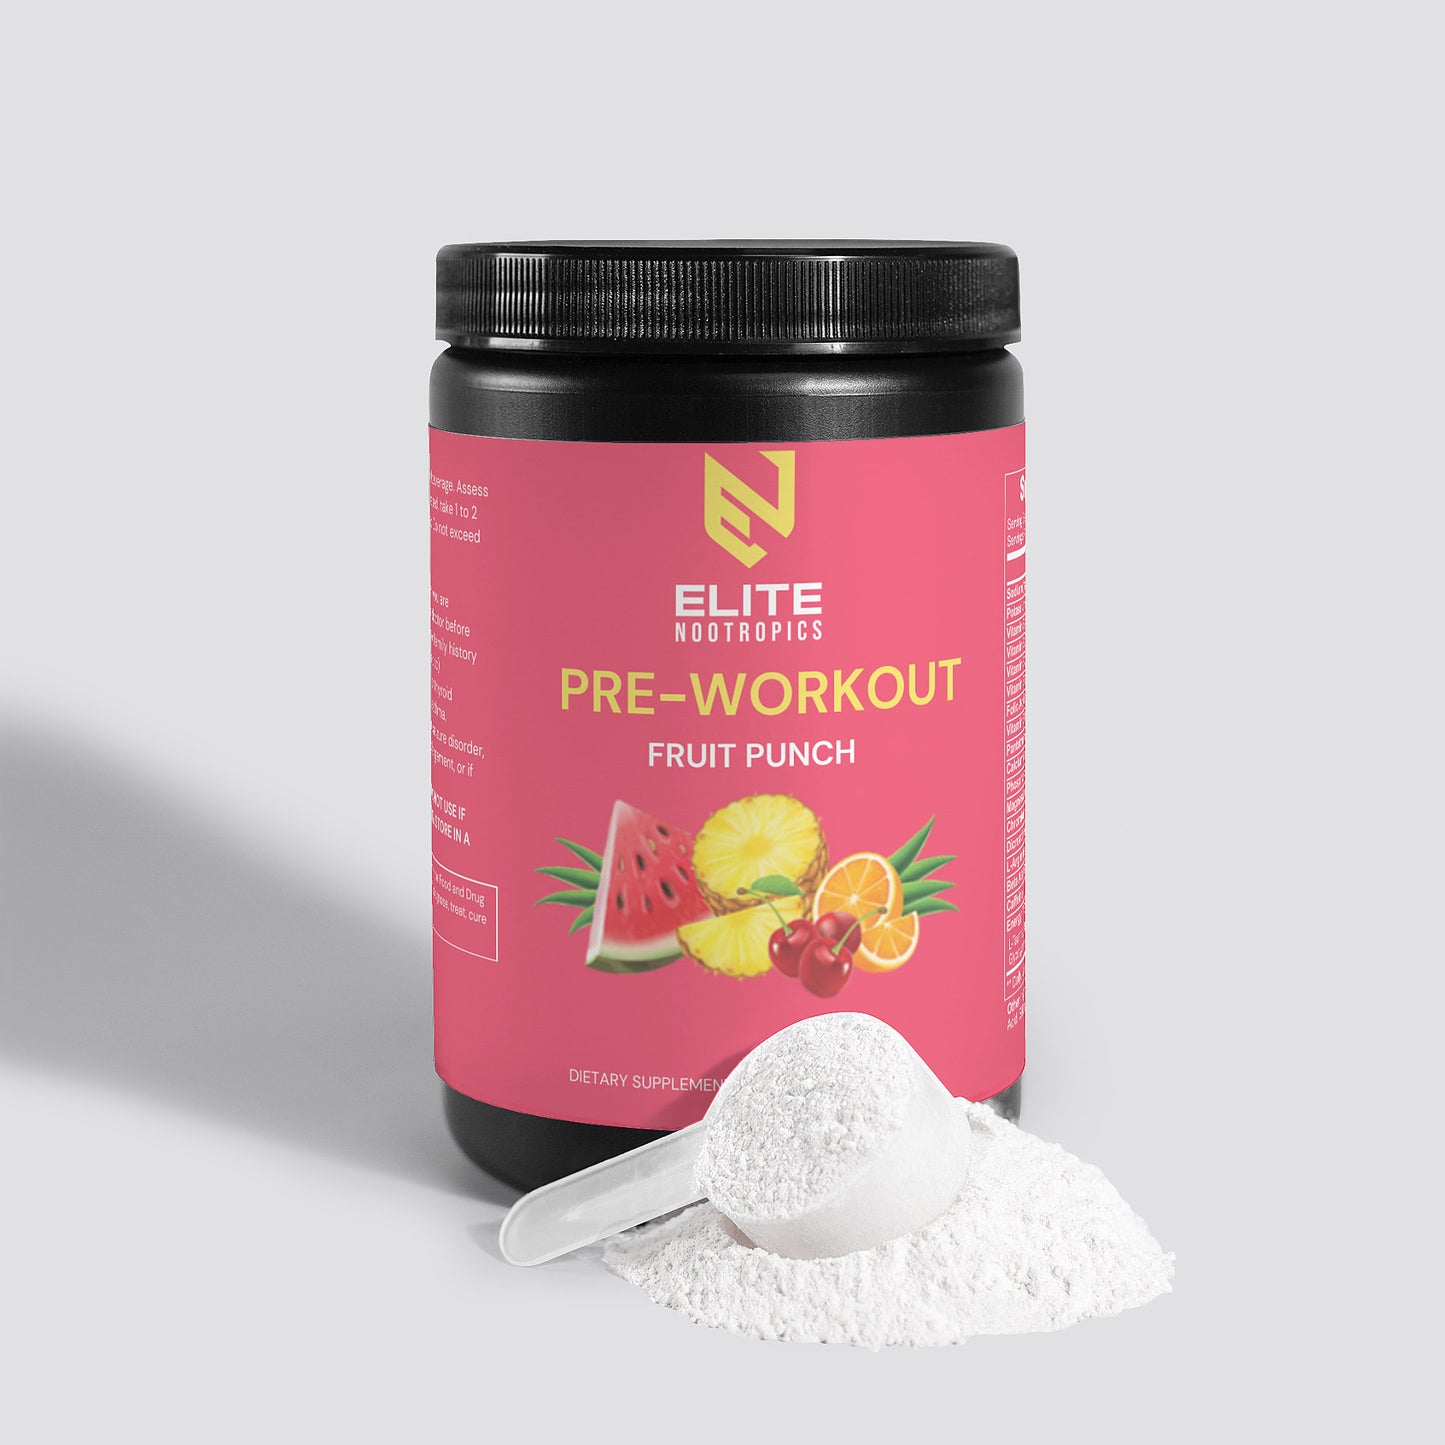 Pre-Workout Powder (Fruit Punch)